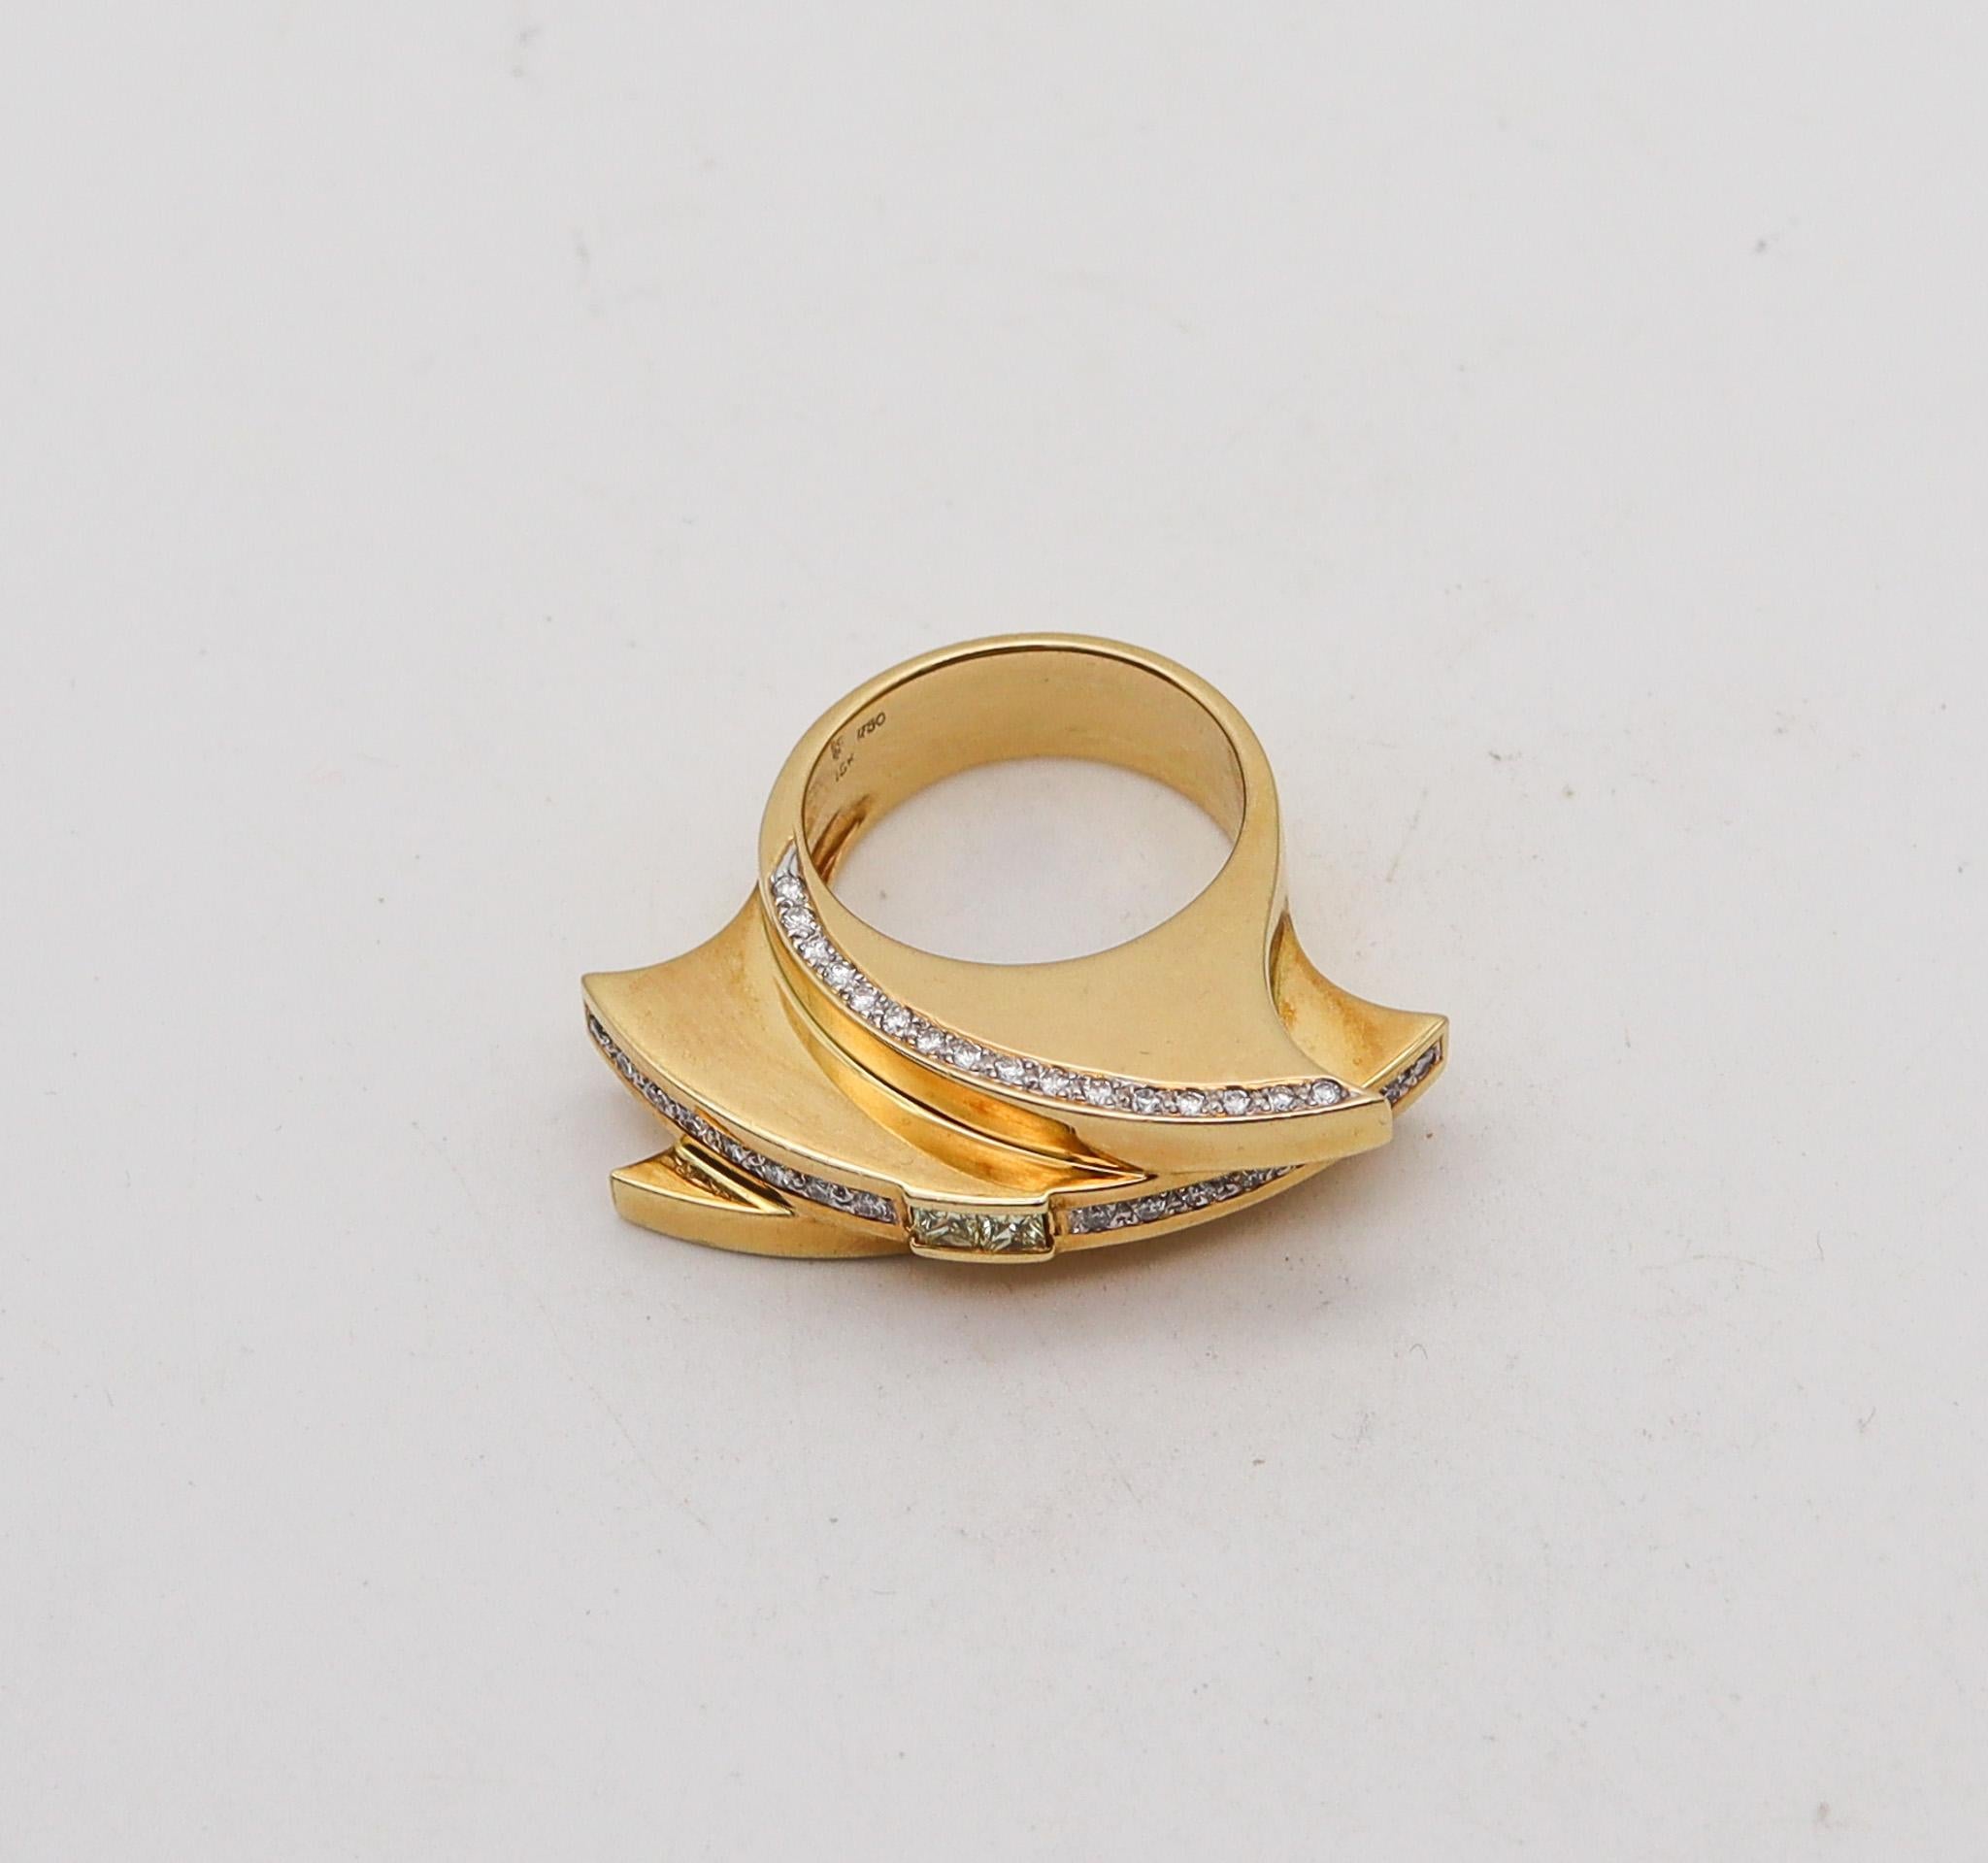 Modernist Studio Designer Geometric Sculptural Ring In 18Kt Gold With 1.62 Ctw Diamonds For Sale